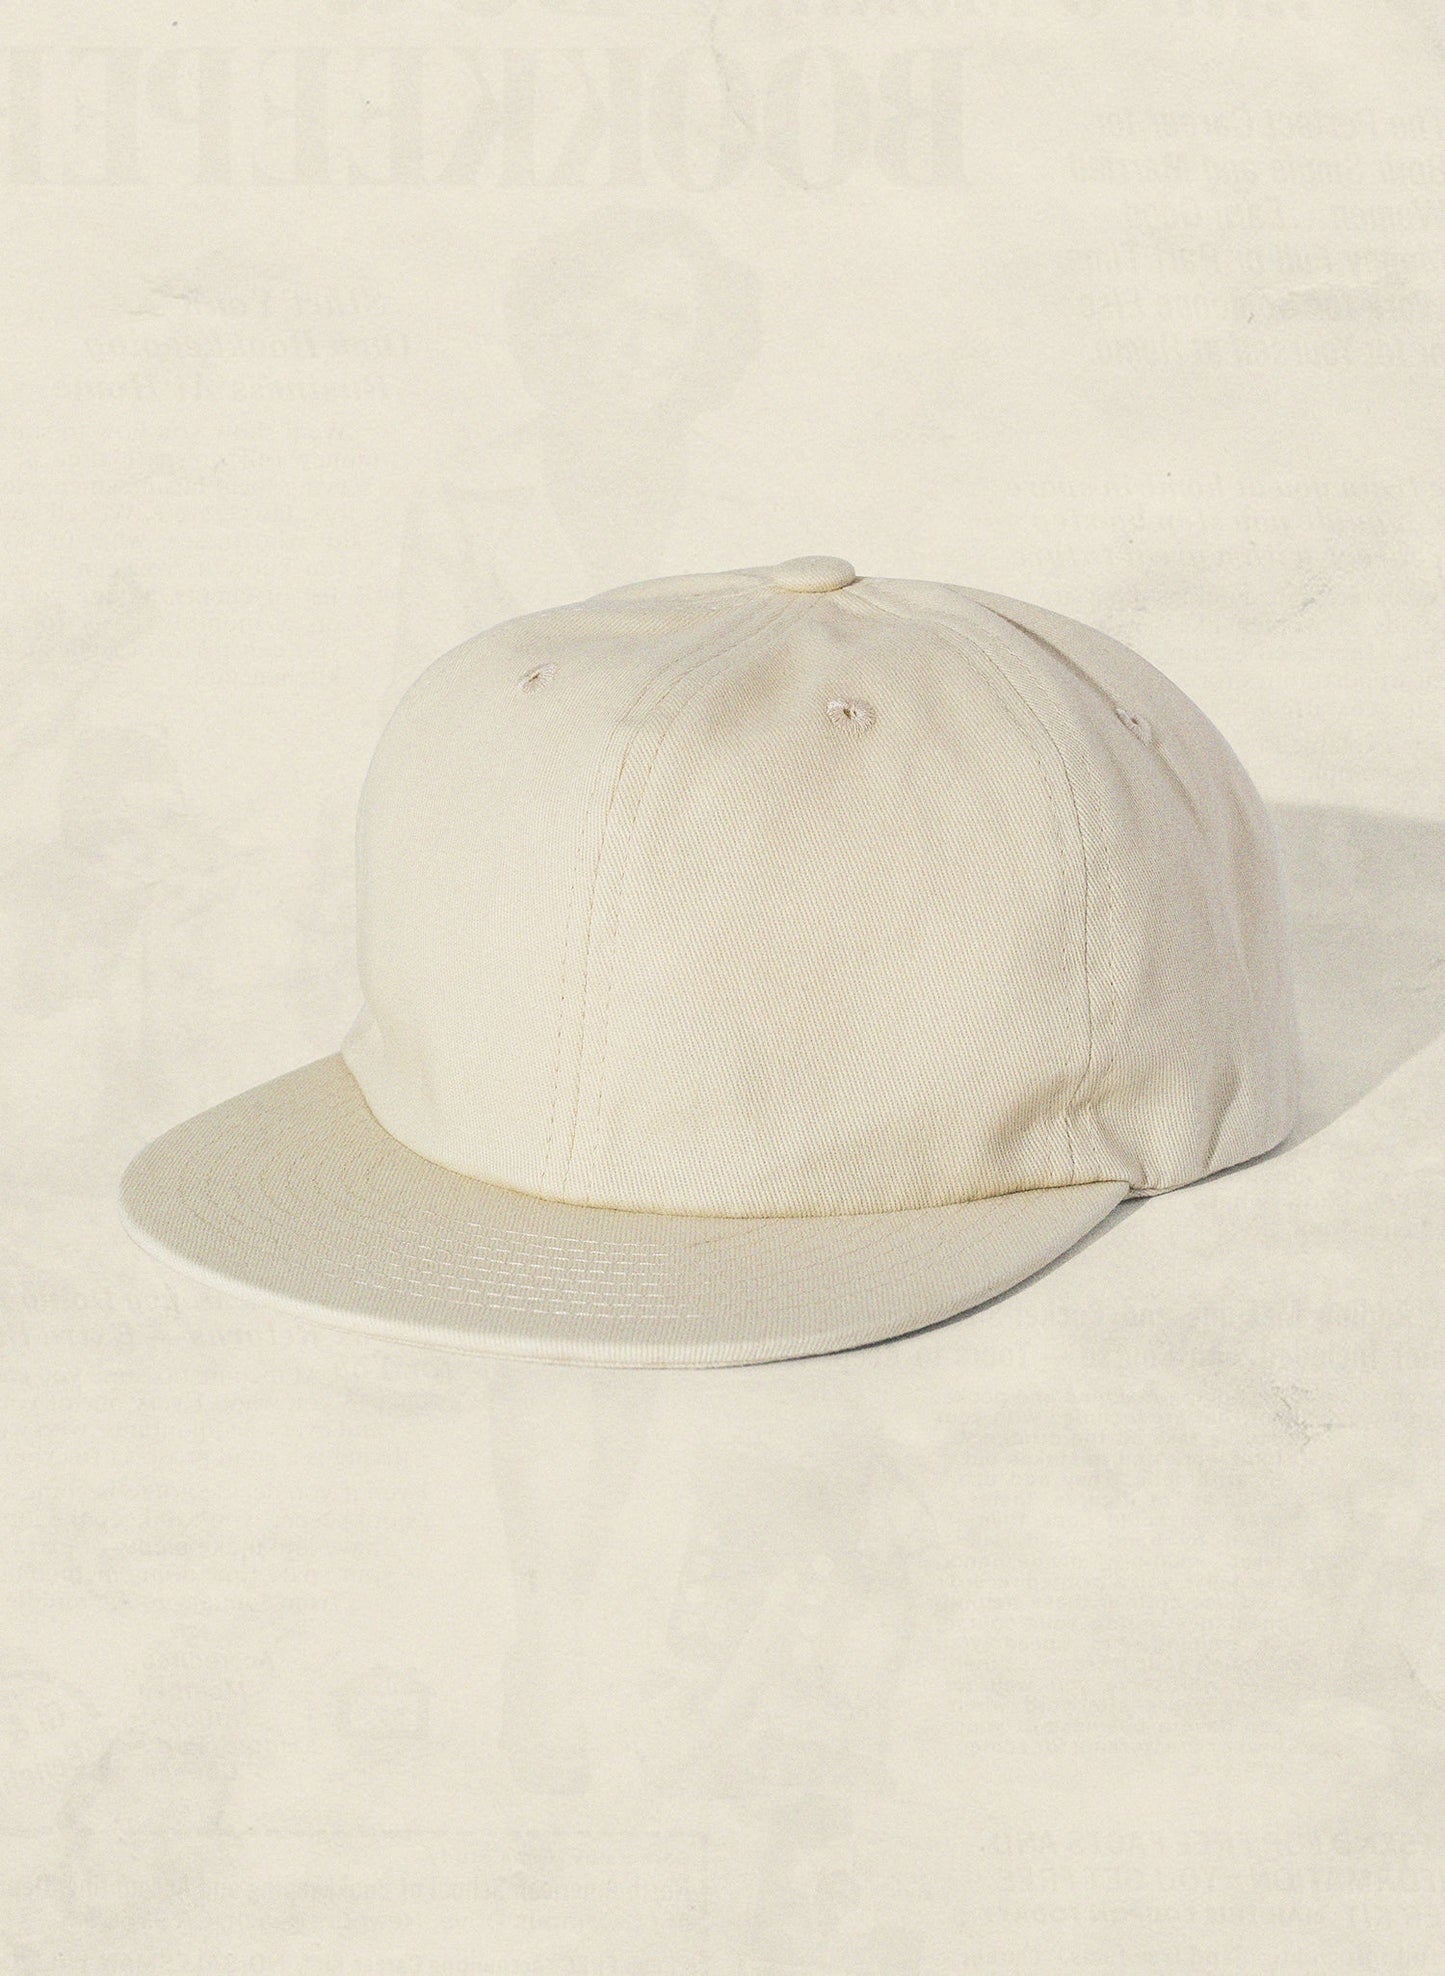 Weld Mfg Field Trip Hat - Unstructured 6 panel brushed cotton twill strapback hat, vintage inspired baseball hat, cream